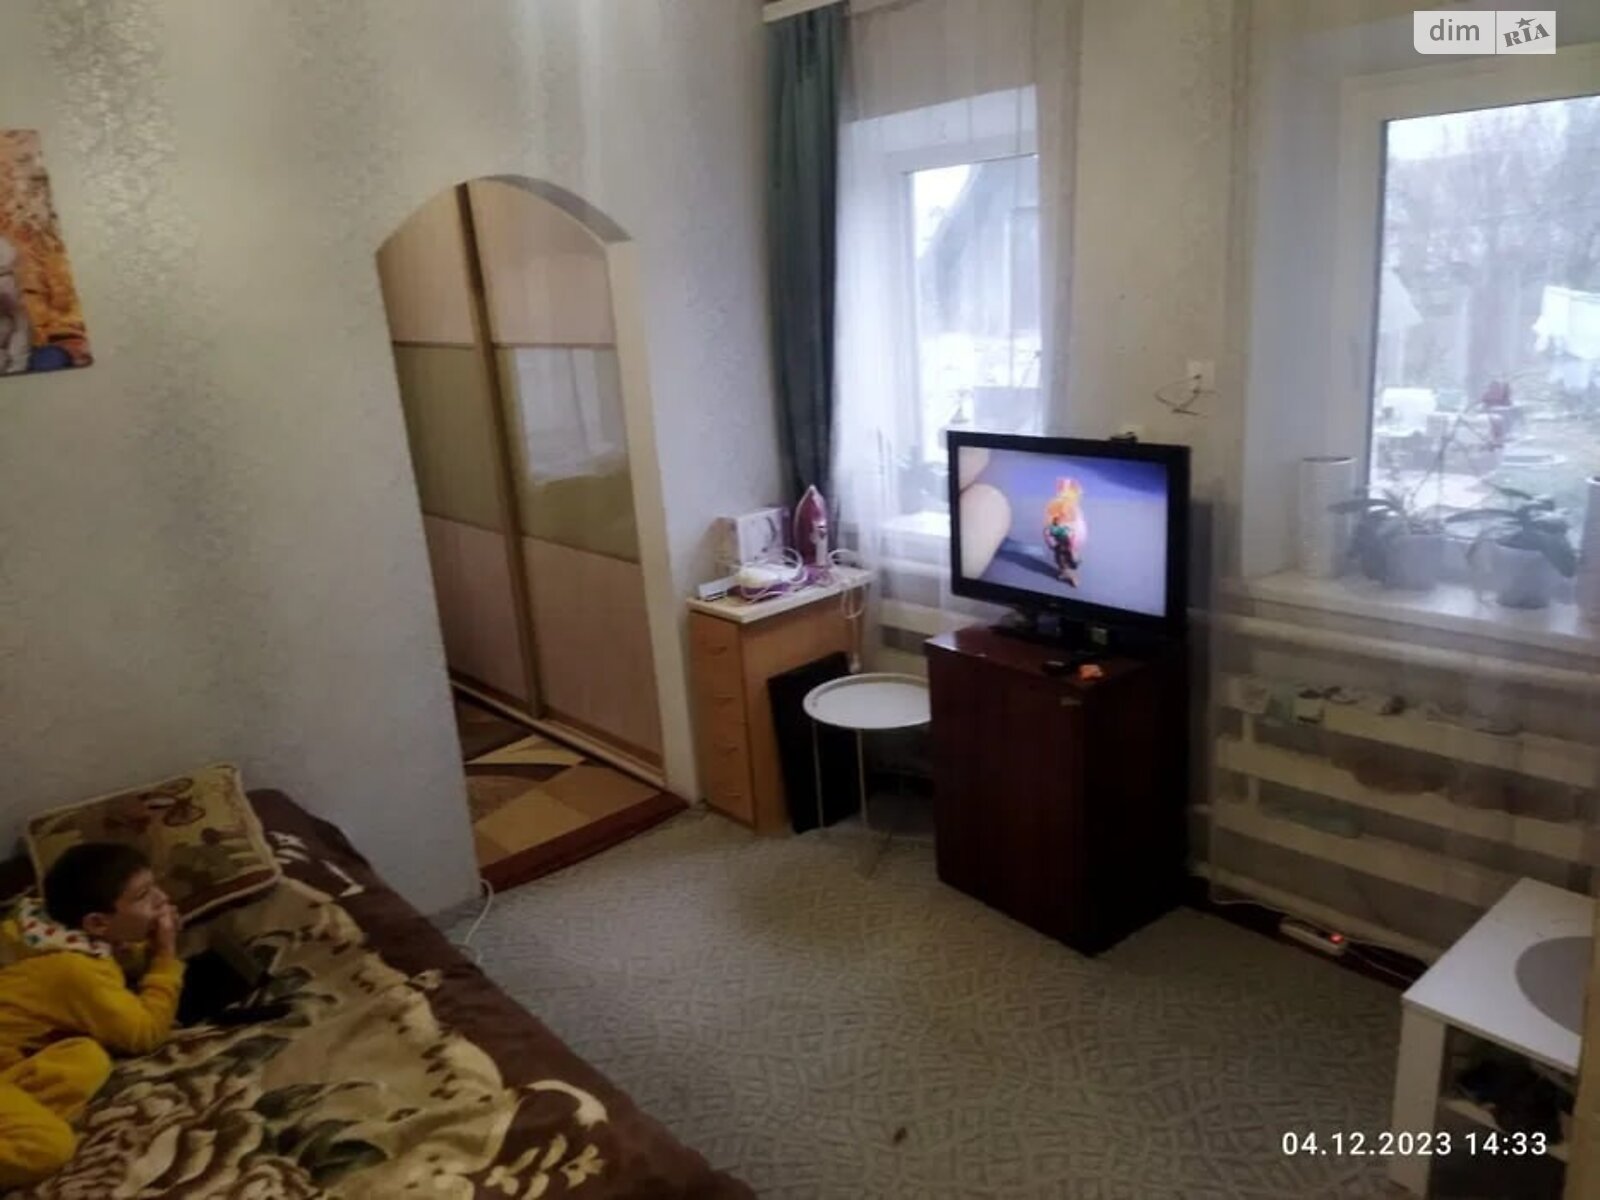 Продажа части дома в Днепре, улица Возрождения, район Новокодакский, 1 комната фото 1